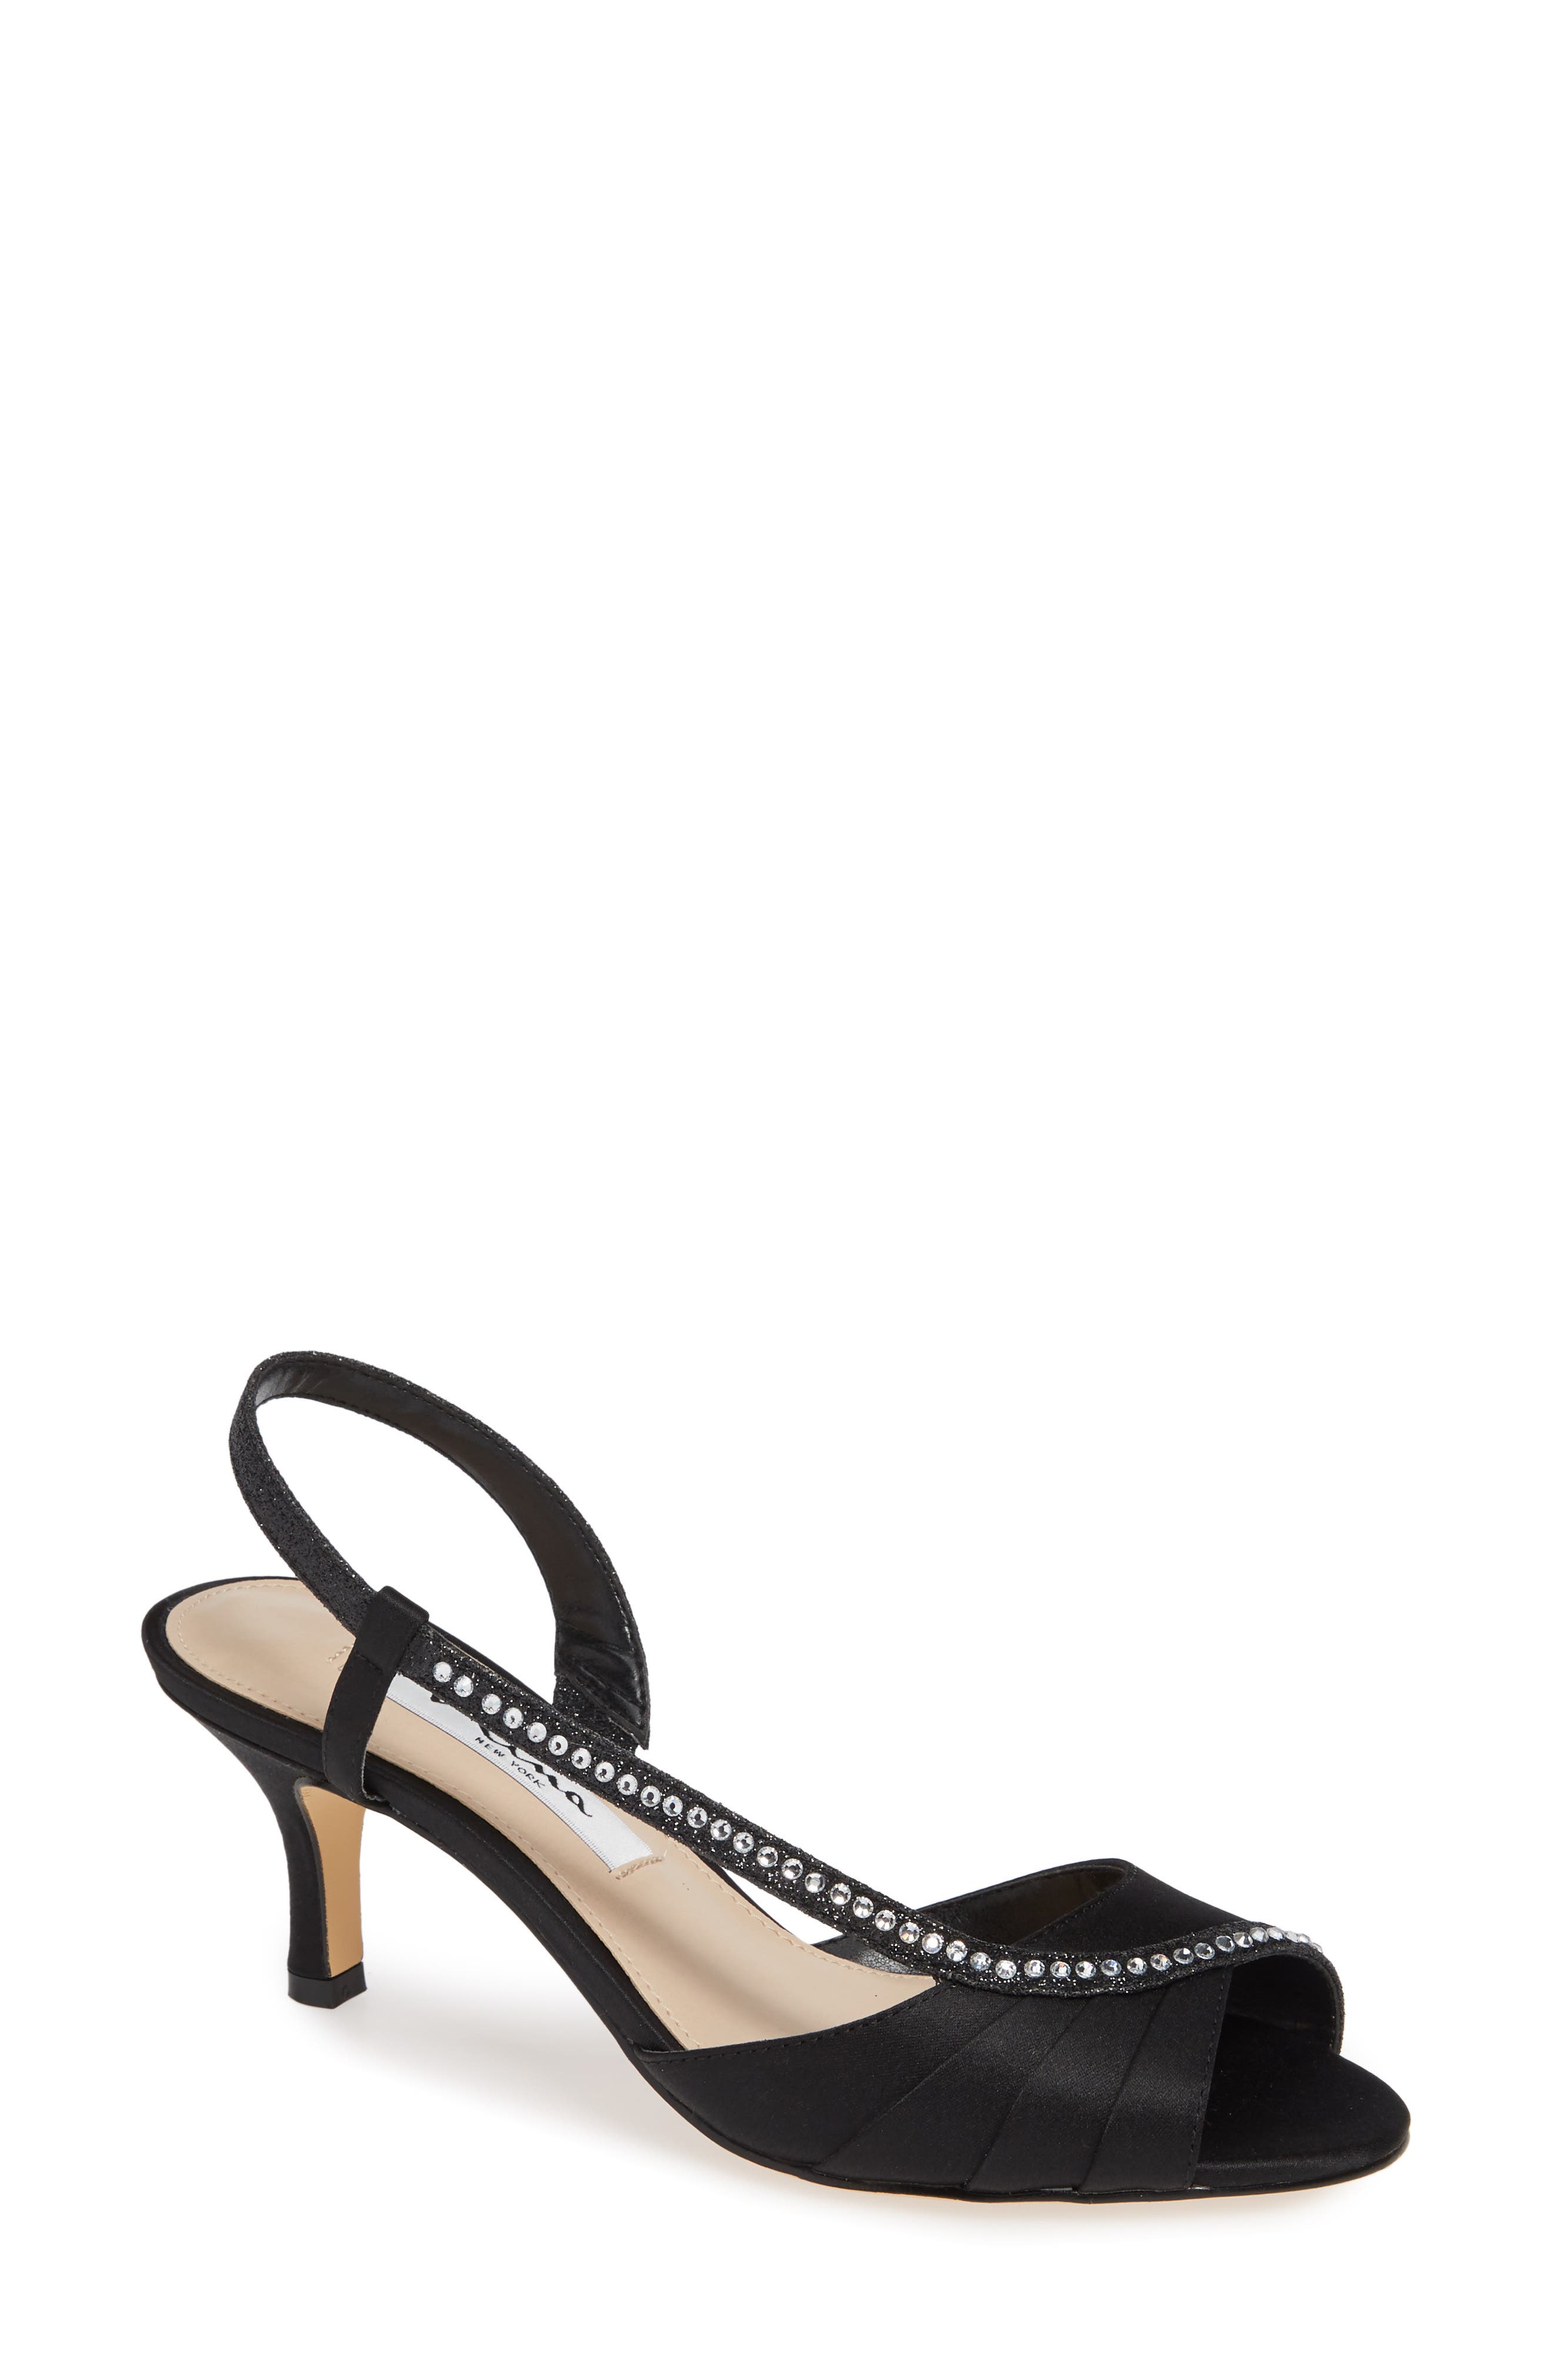 UPC 716142064779 product image for Women's Nina Cabell Slingback Sandal, Size 9 M - Black | upcitemdb.com